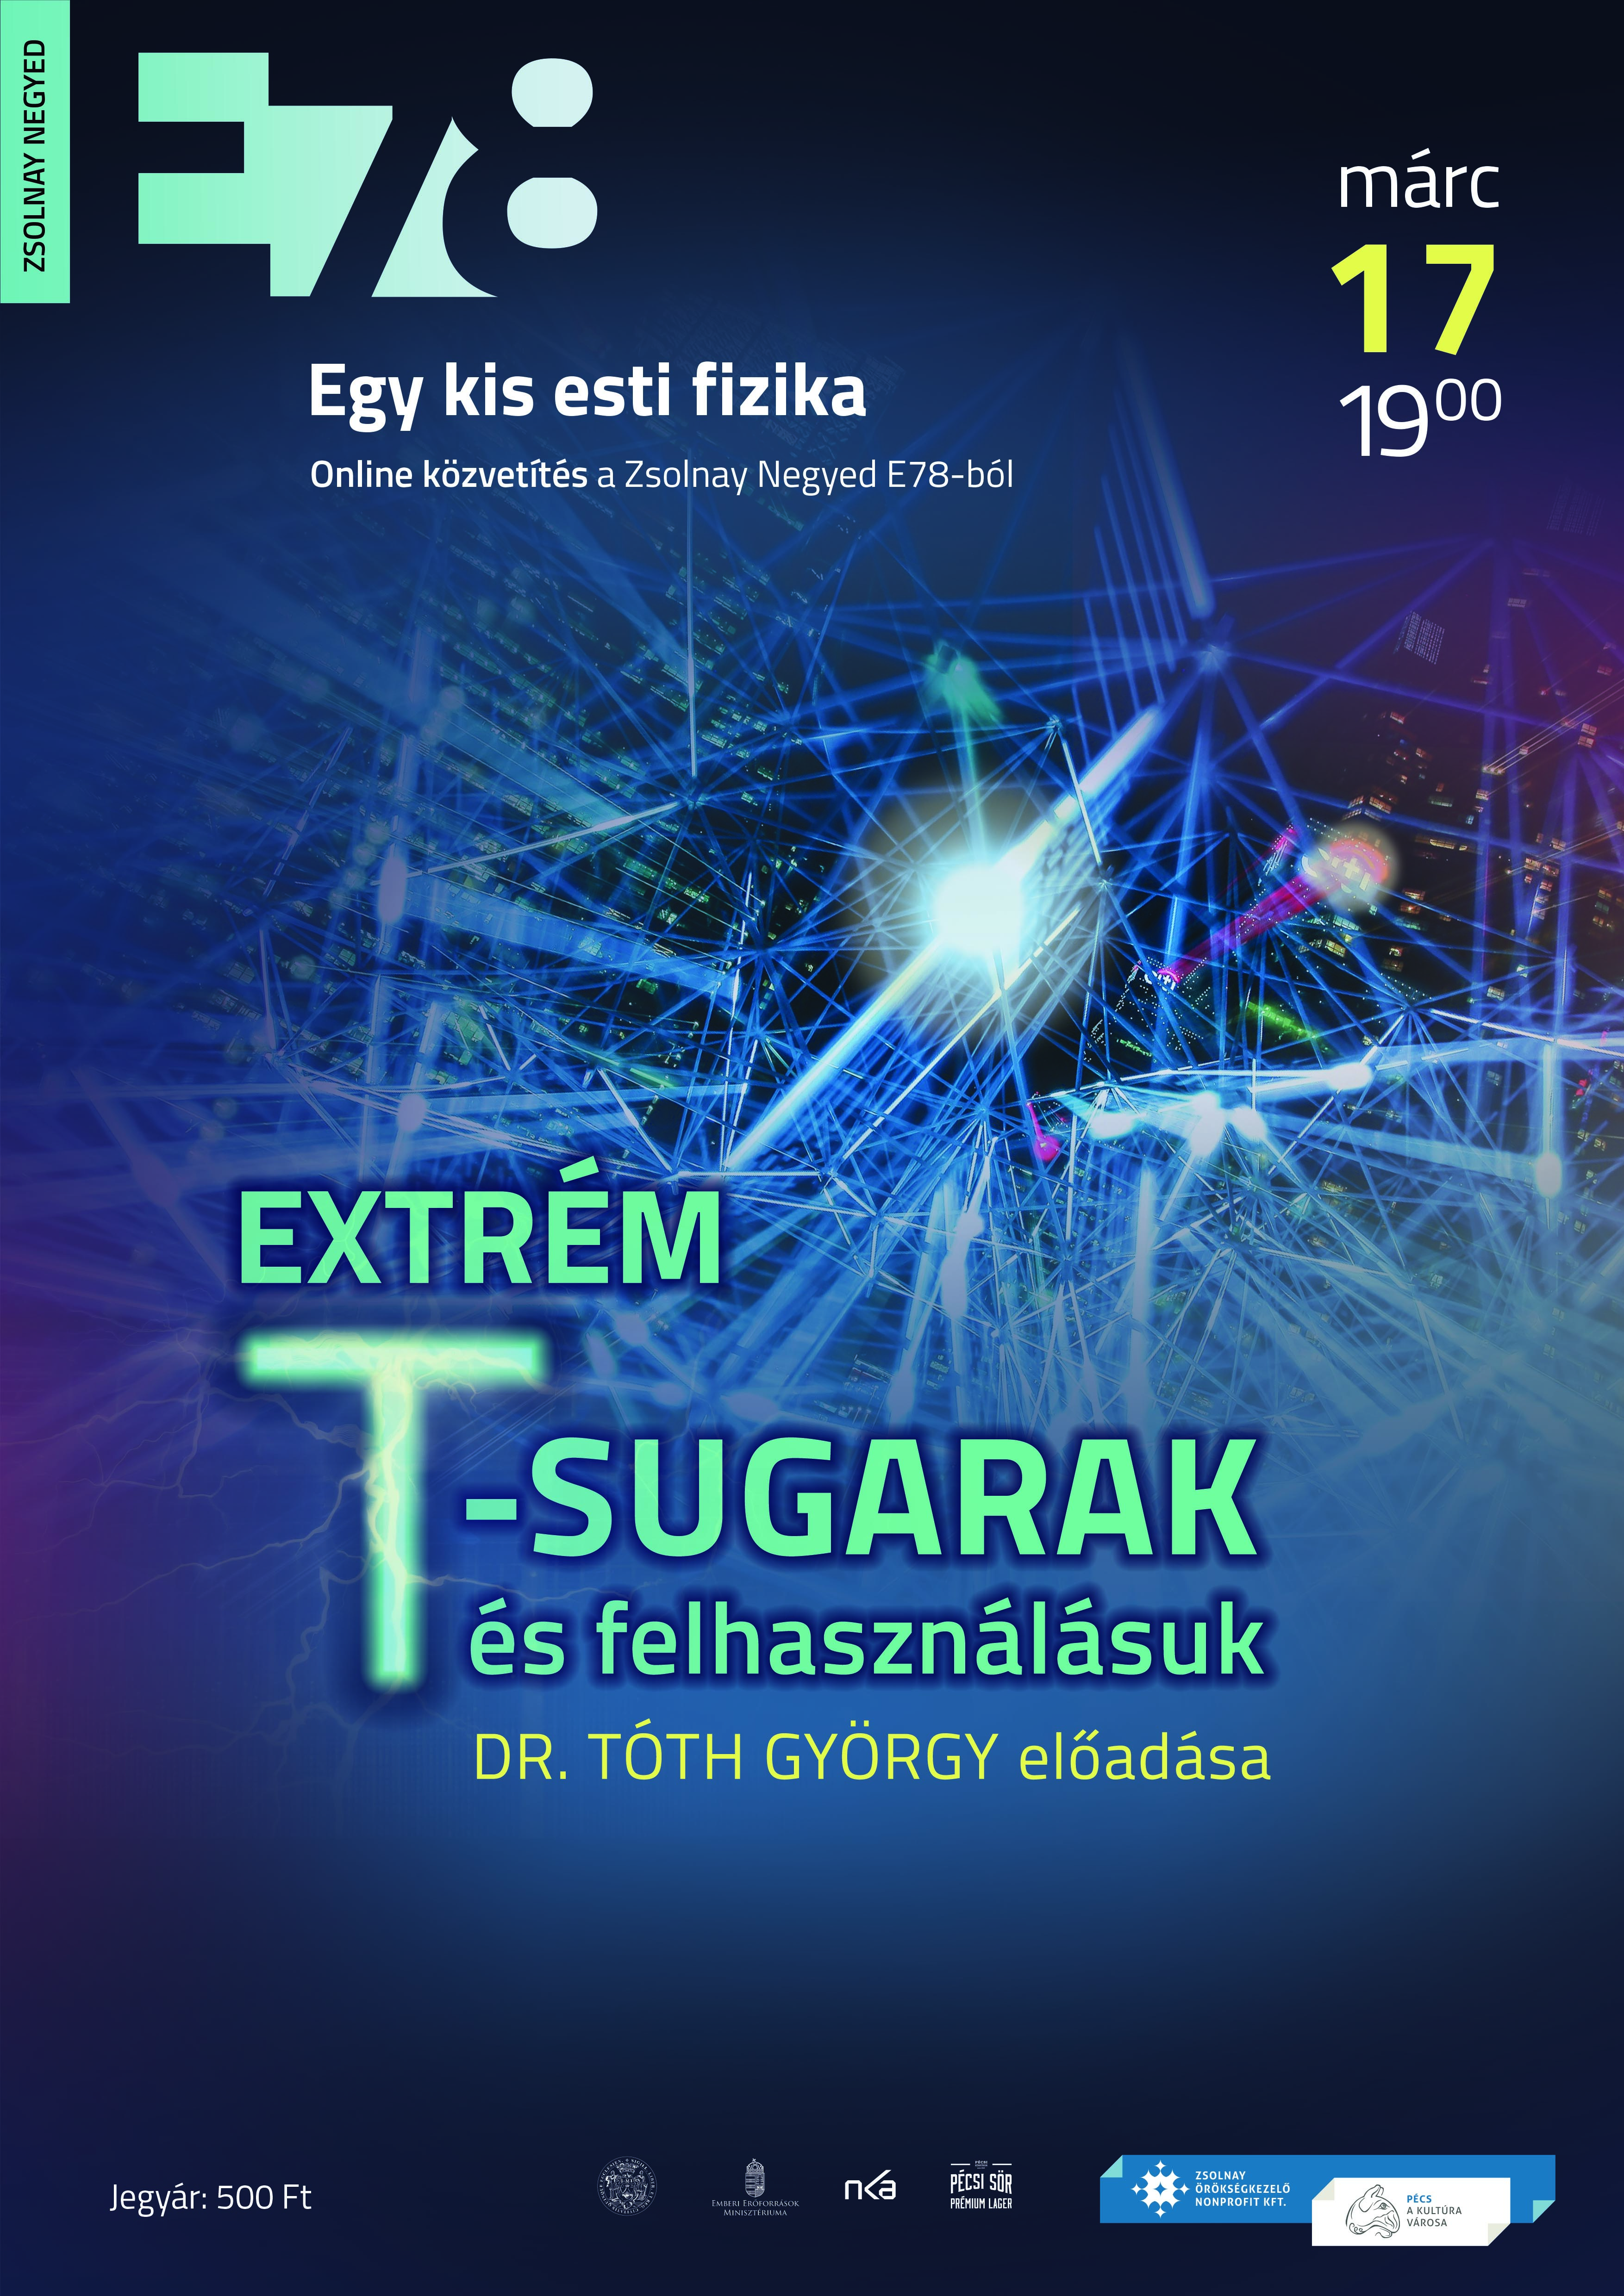 fizika_Extrem-T-sugarak_marcius2021